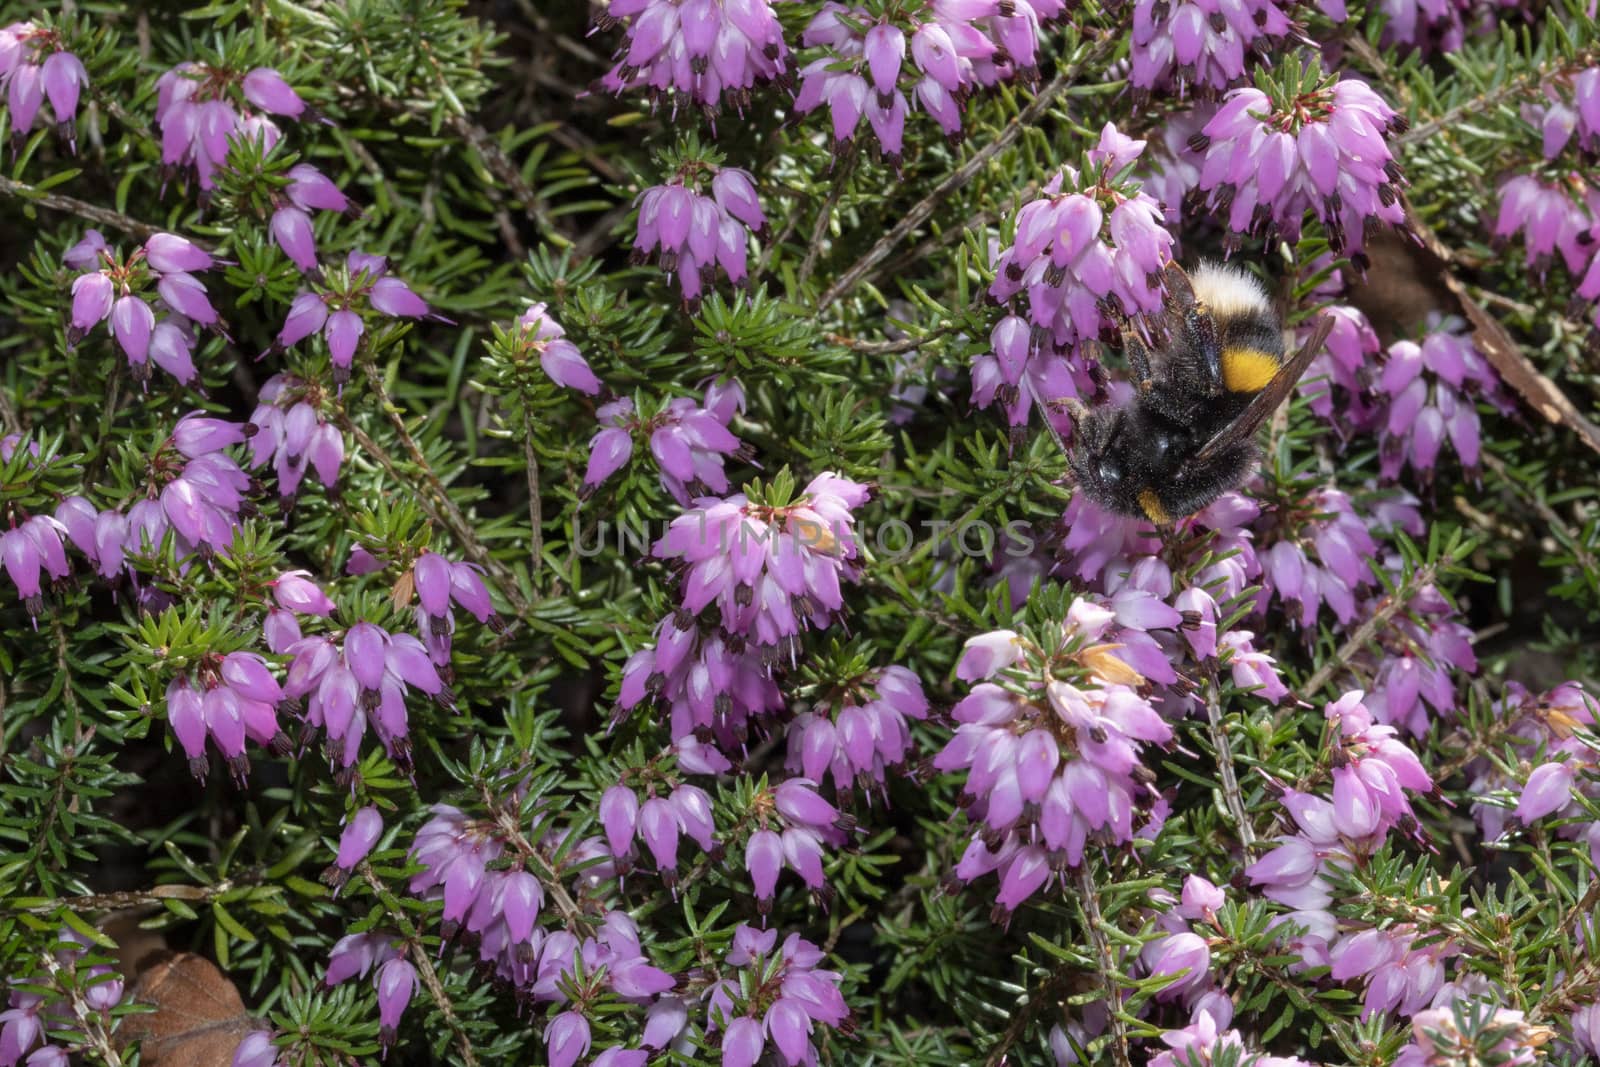 Closeup view of a bumblebee surfing on violet calluna vulgaris flowers by ankorlight